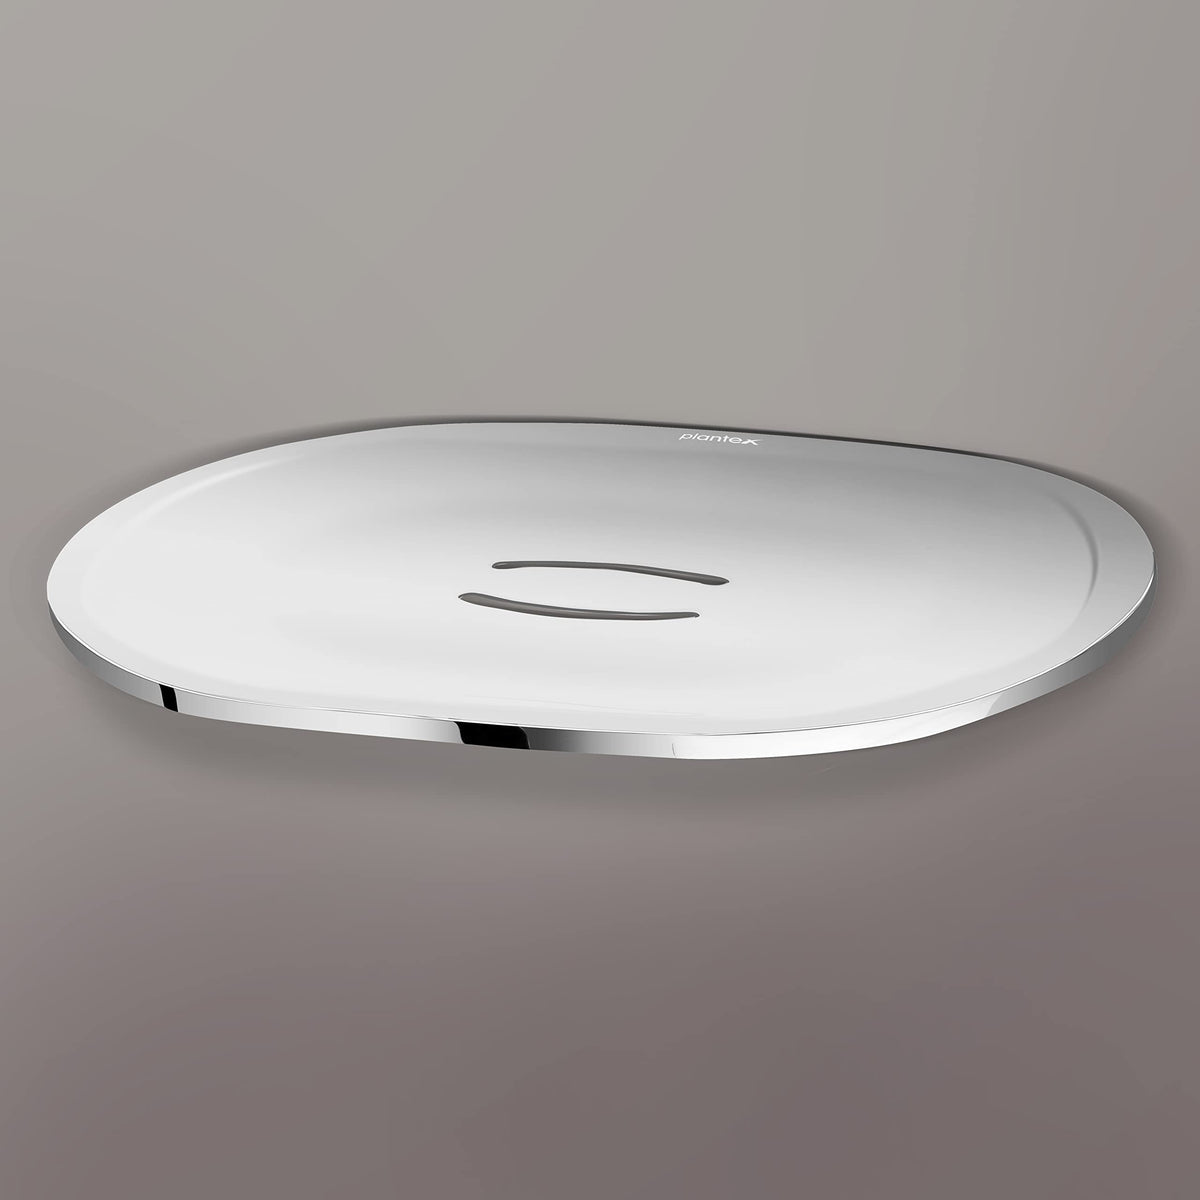 Plantex Fully Brass Smero Soap Dish/Stand/Holder for Bathroom & Kitchen/Bathroom Accessories - Chrome (AQ-8133)